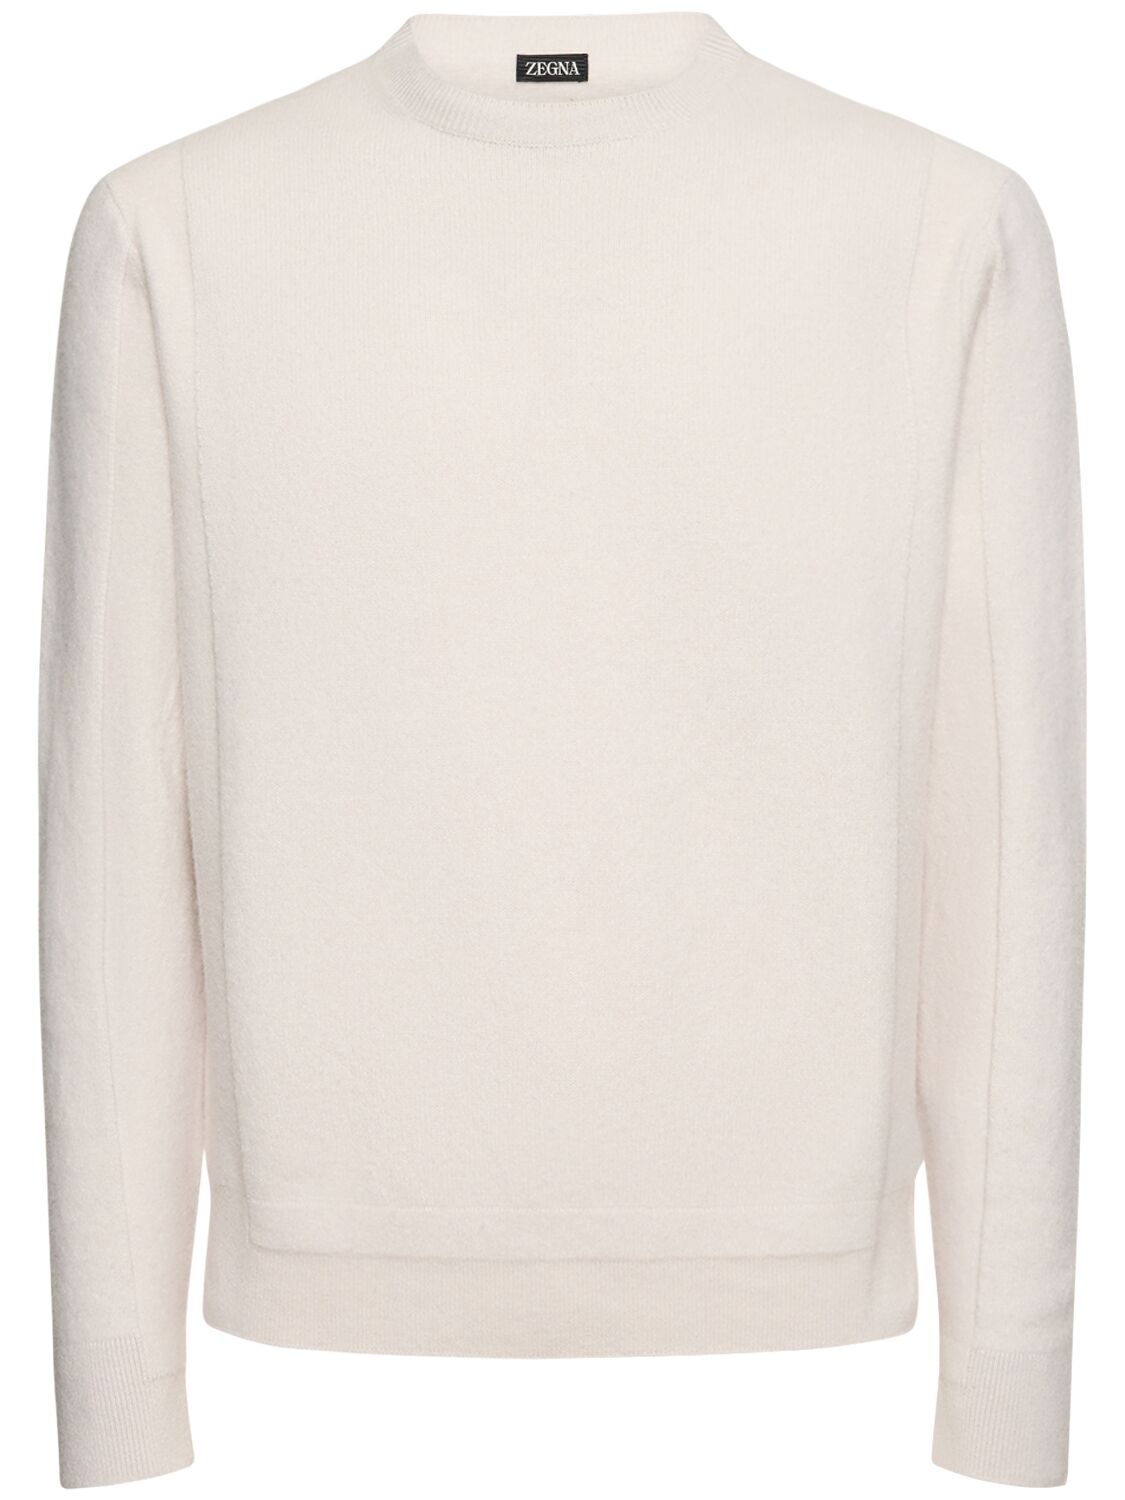 Zegna Wool & Cashmere Crewneck Sweater In White